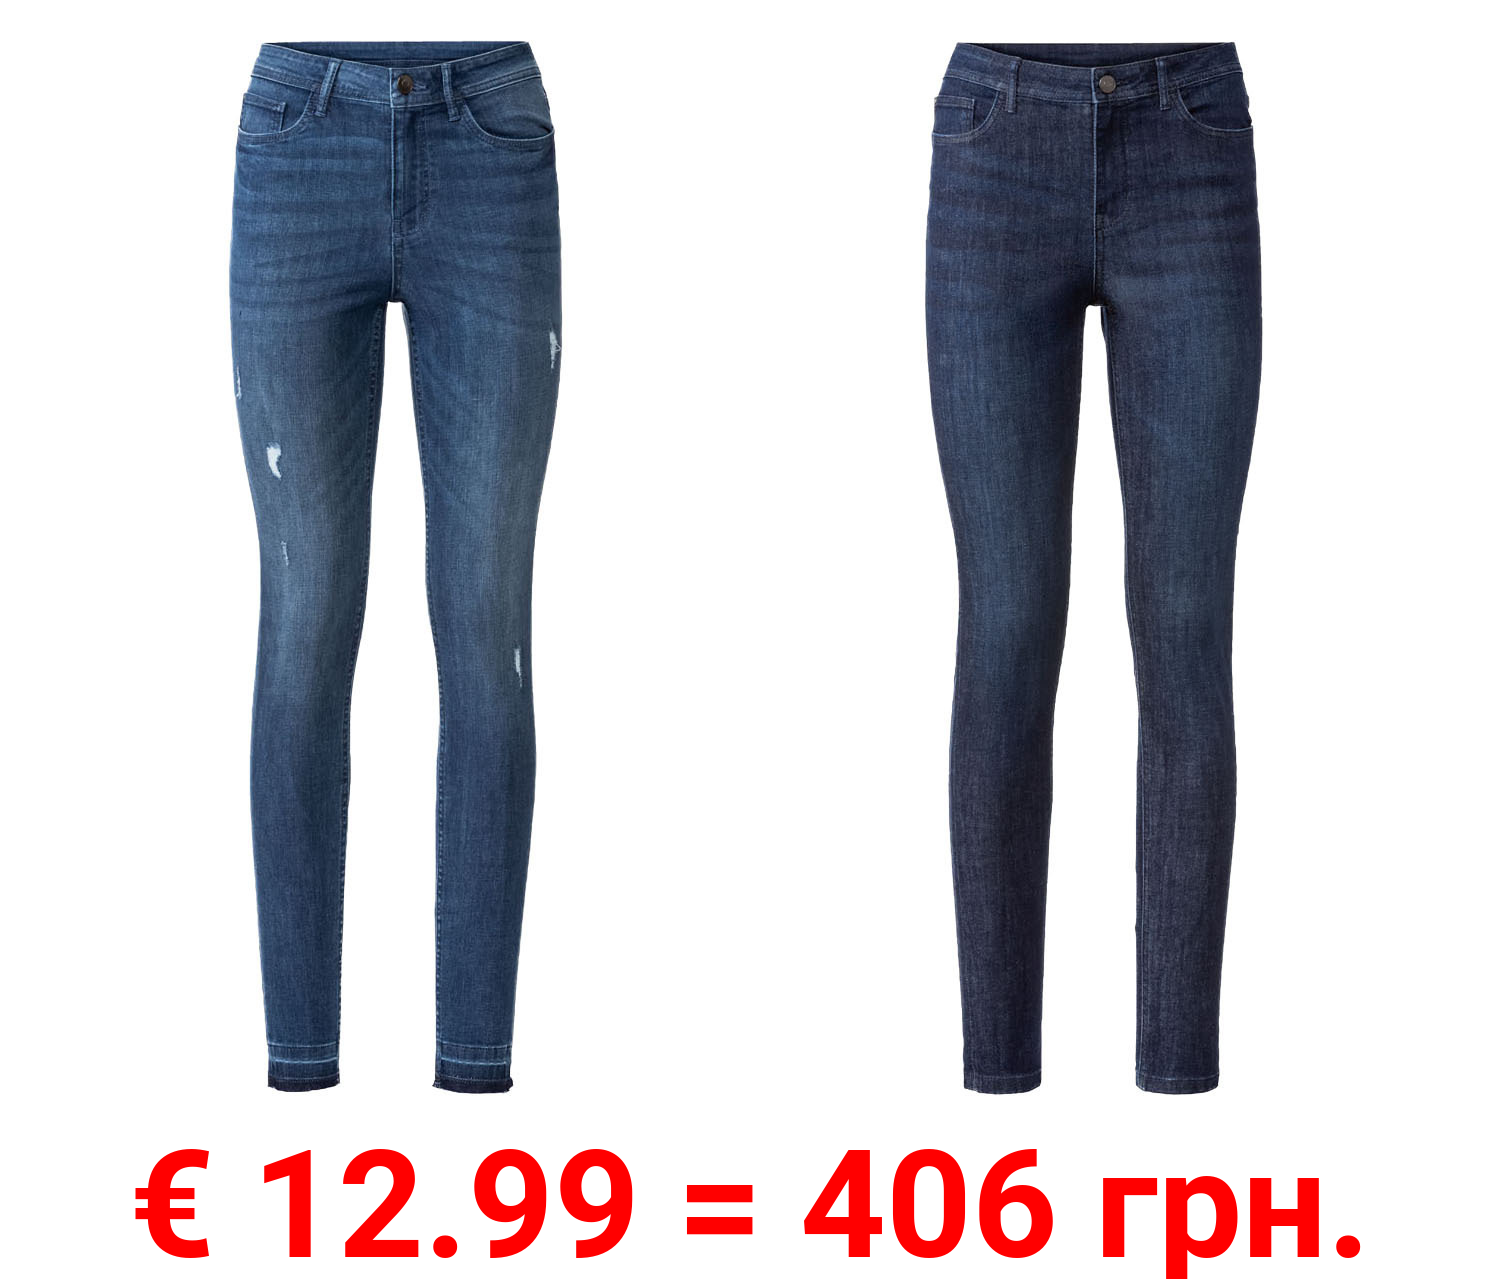 ESMARA® Damen High Waist Jeans, Super Sinny Fit